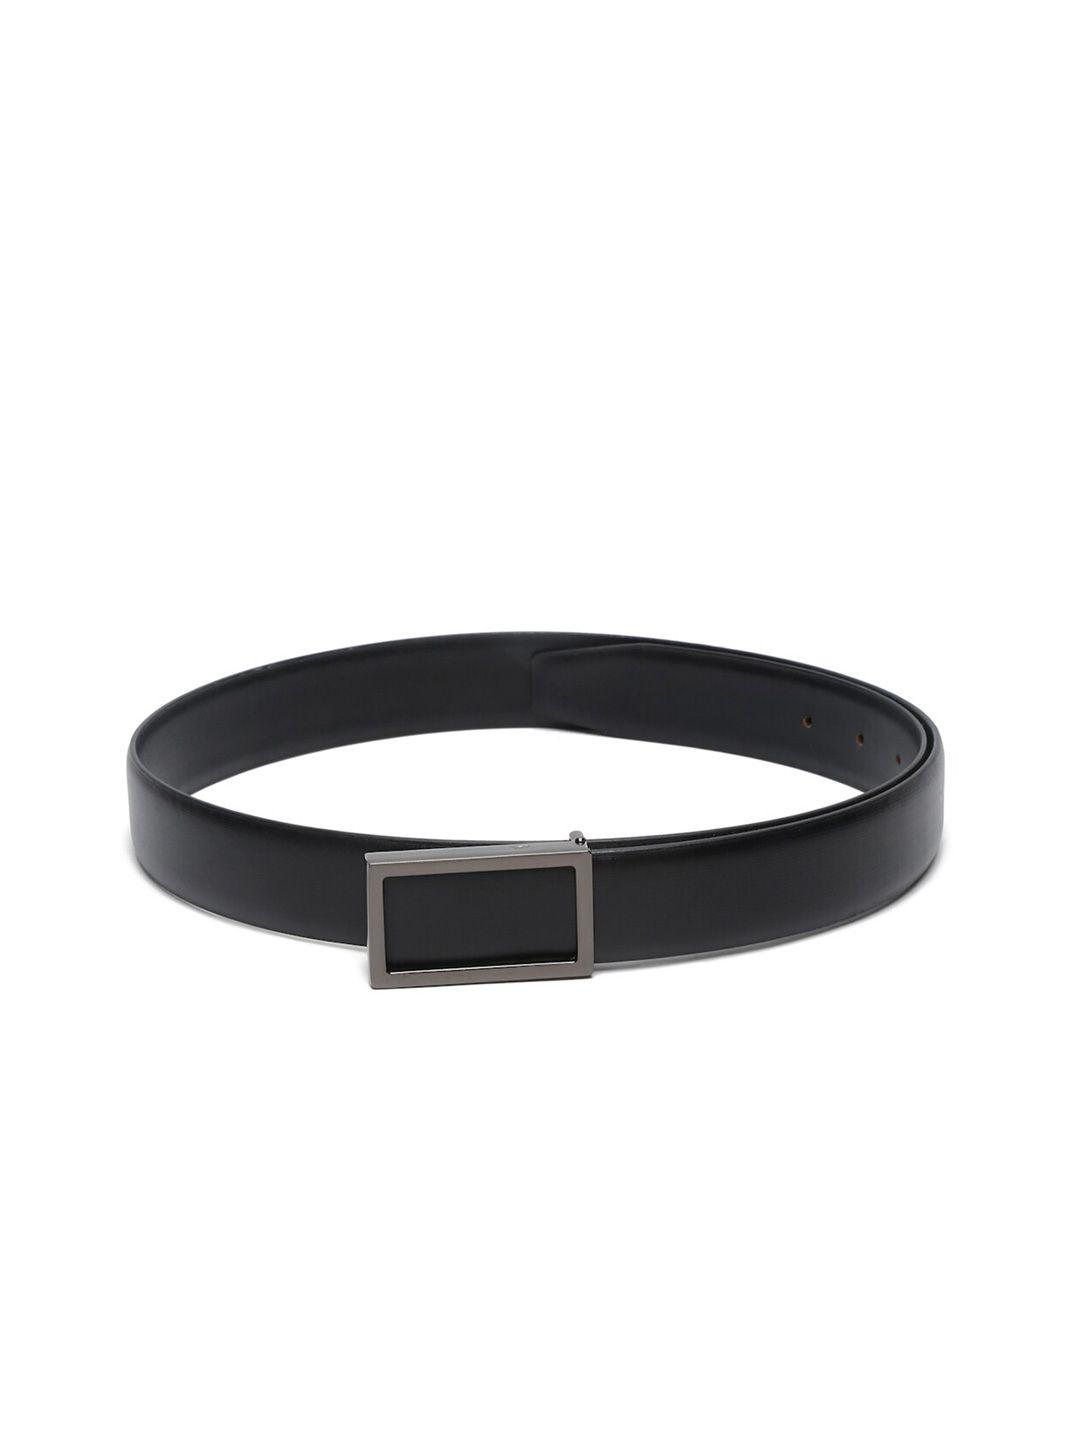 louis stitch men black leather formal belt